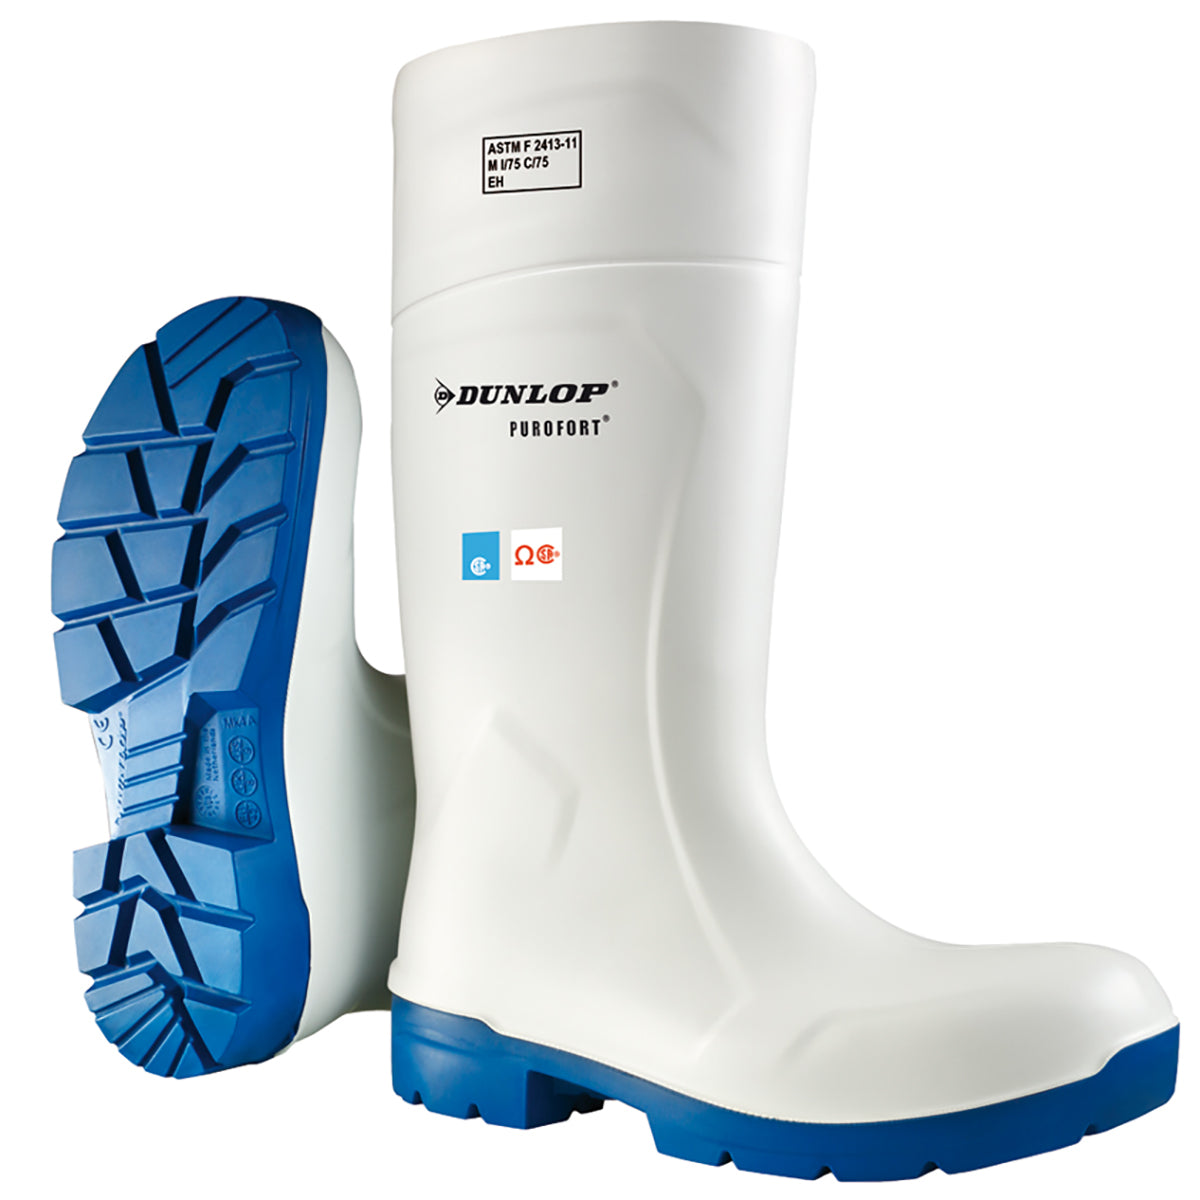 Dunlop, Purofort FoodPro MultiGrip Safety Boots